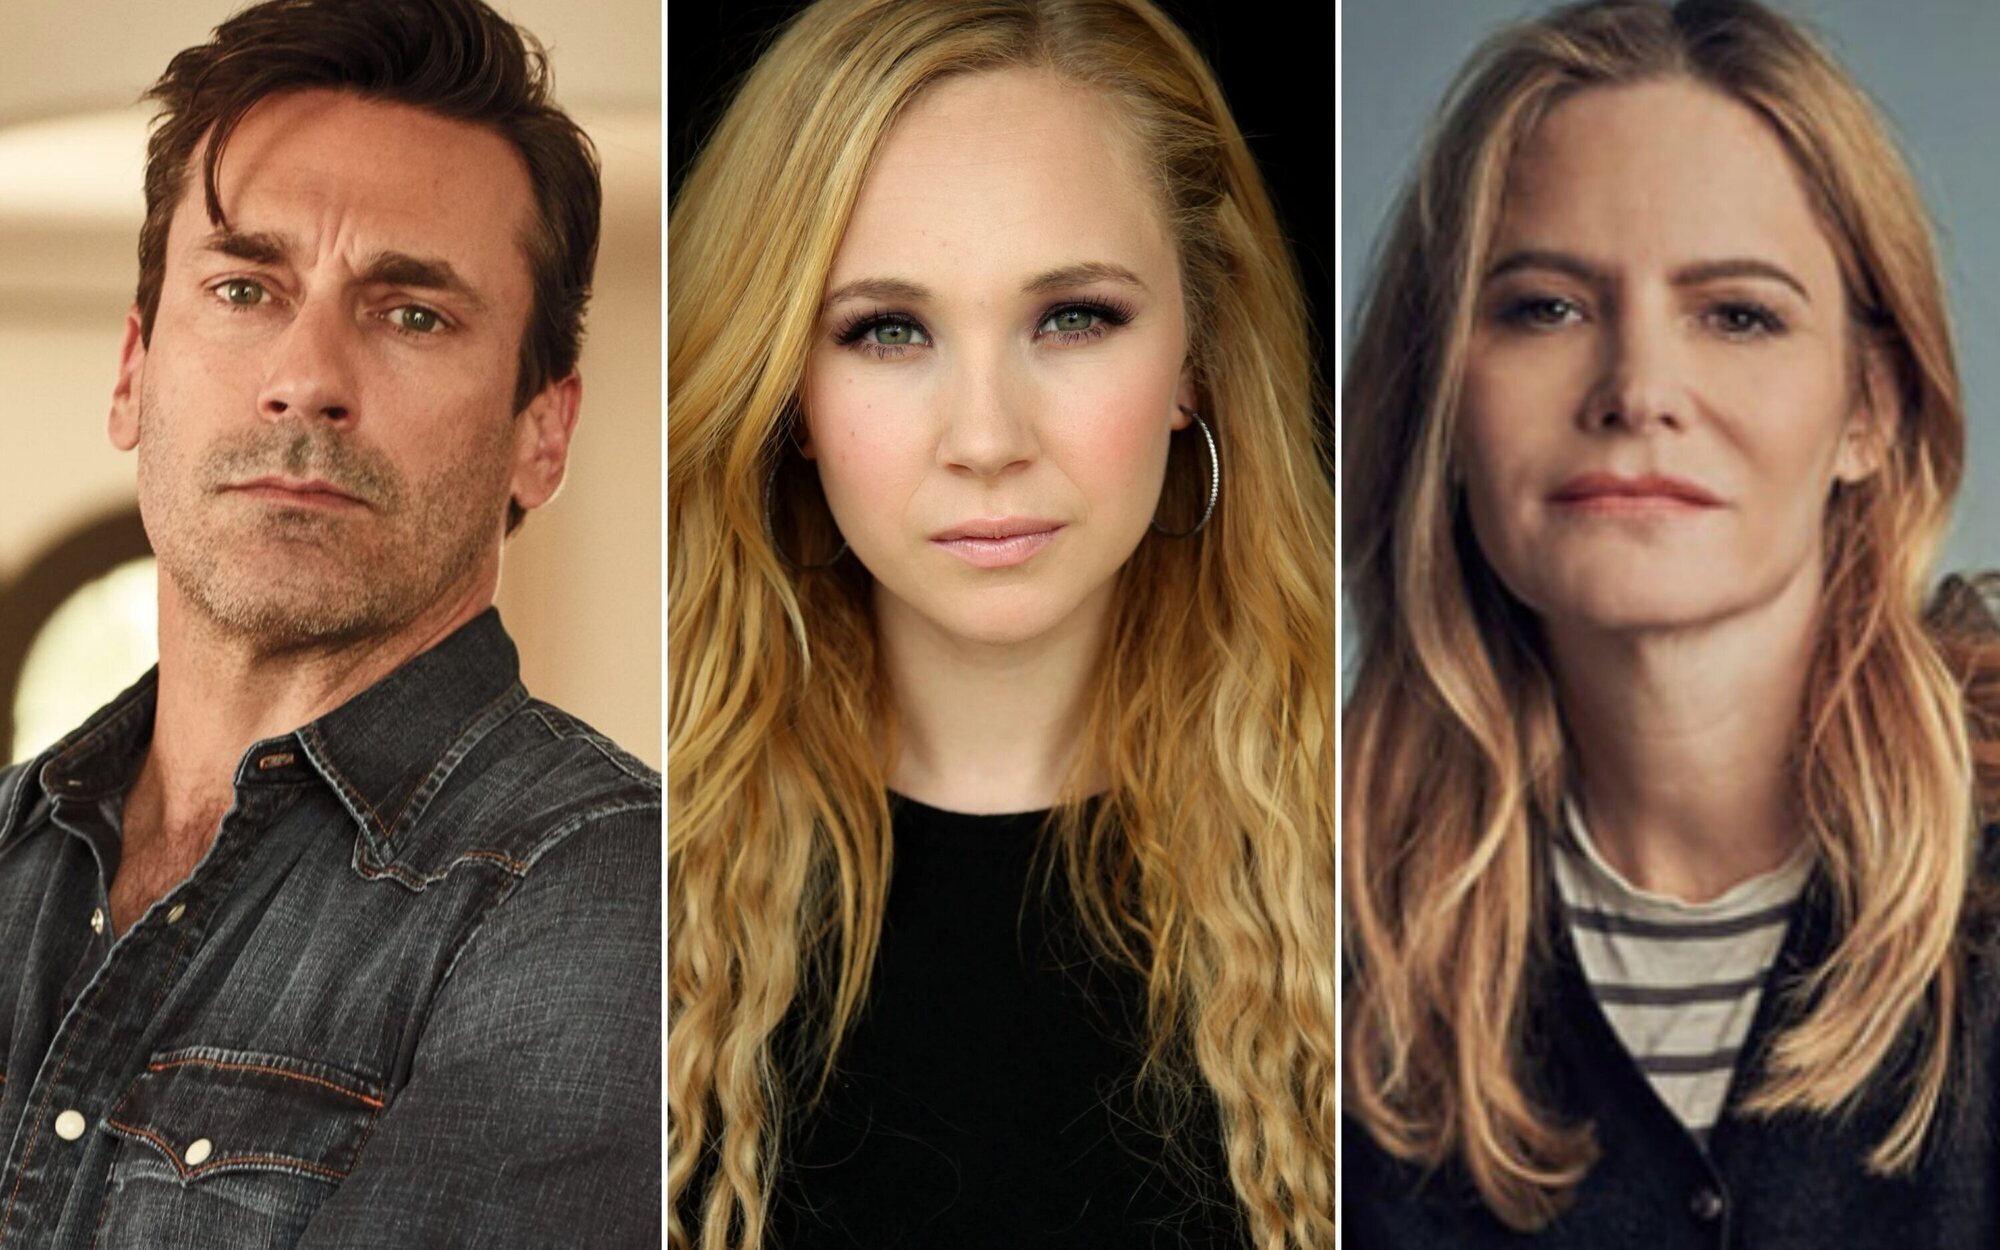 Jon Hamm, Juno Temple y Jennifer Jason Leigh protagonizarán la quinta temporada de 'Fargo'